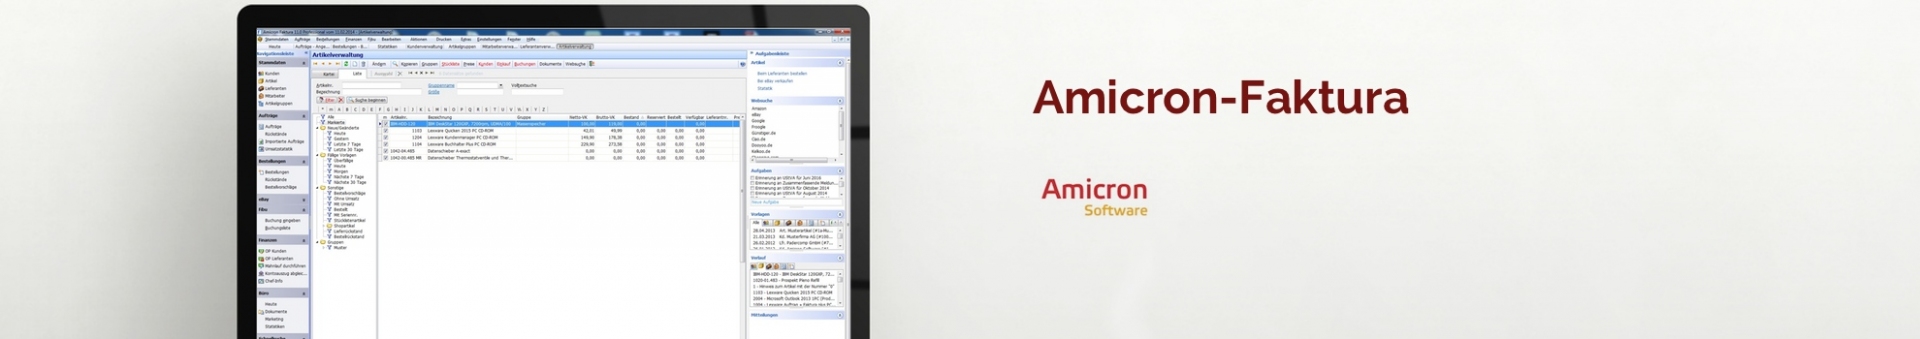 Amicron Software